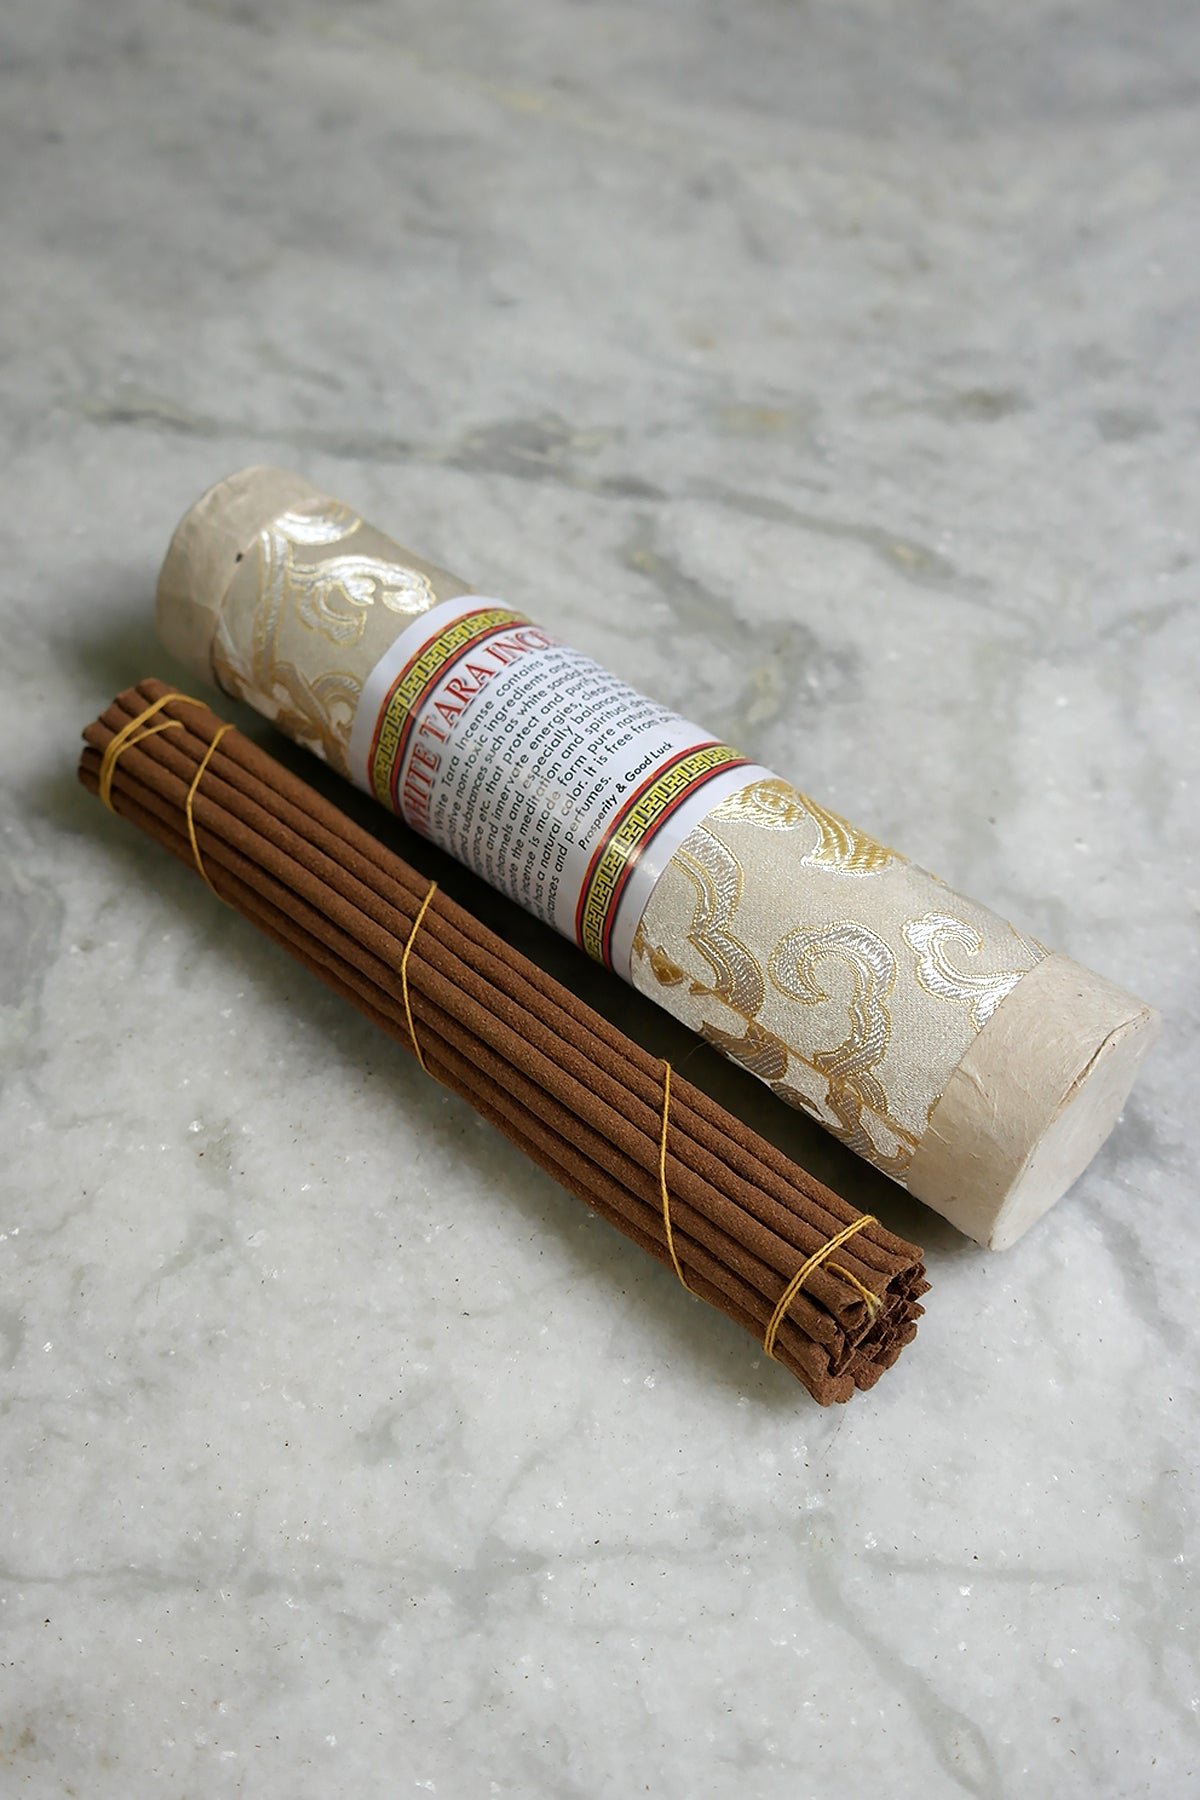 White Tara Incense in brocade pack